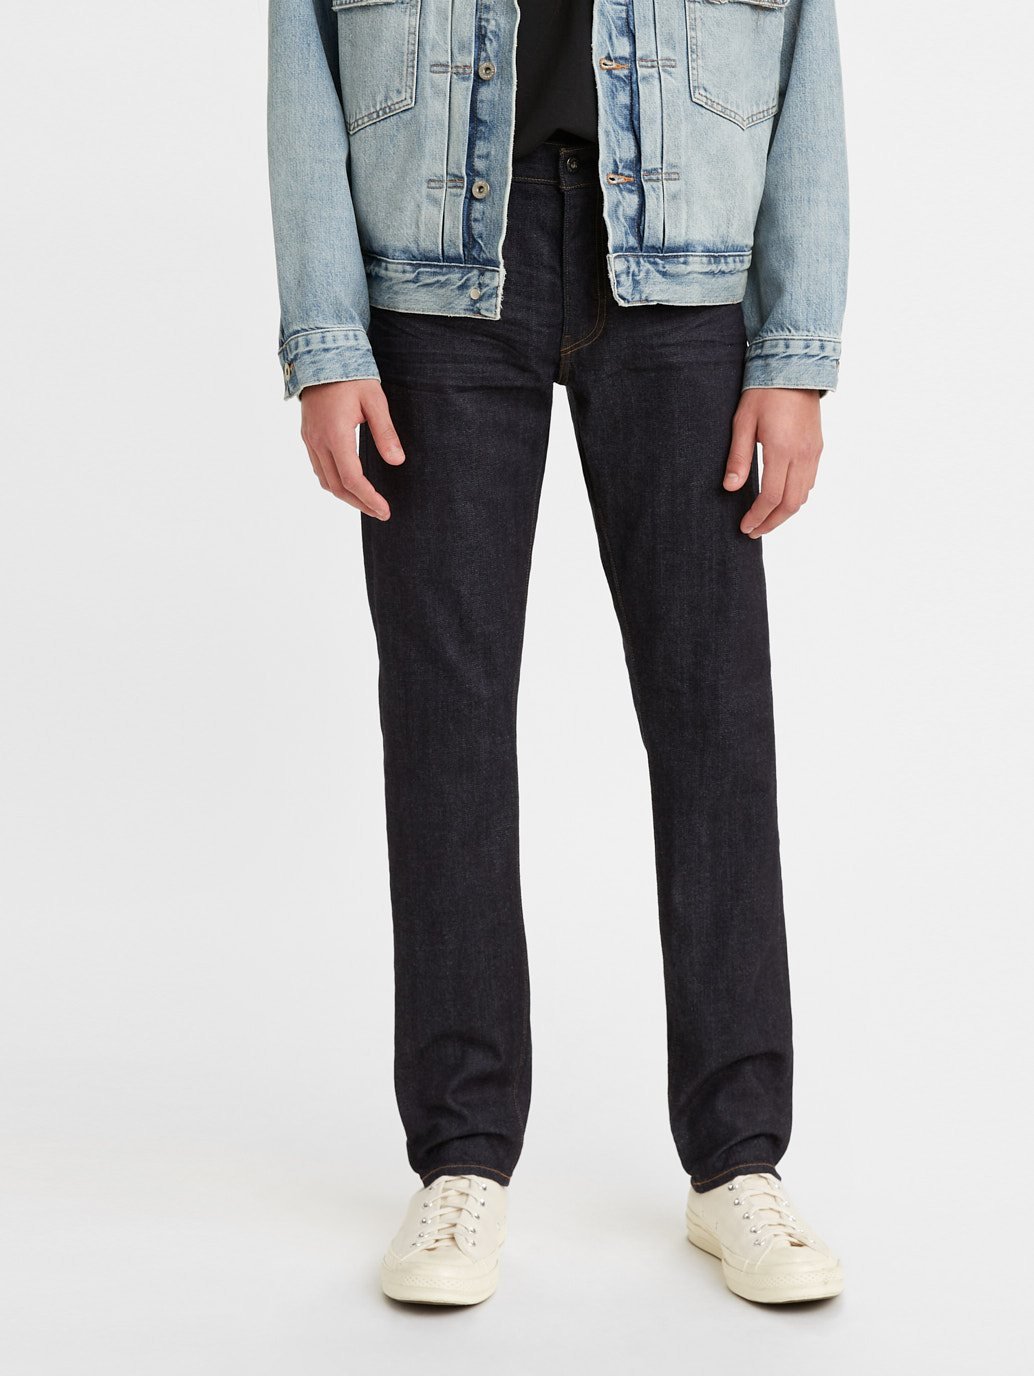 Buy Levi's® Made in Japan Men's 511™ Slim Jeans | Levi's® Official